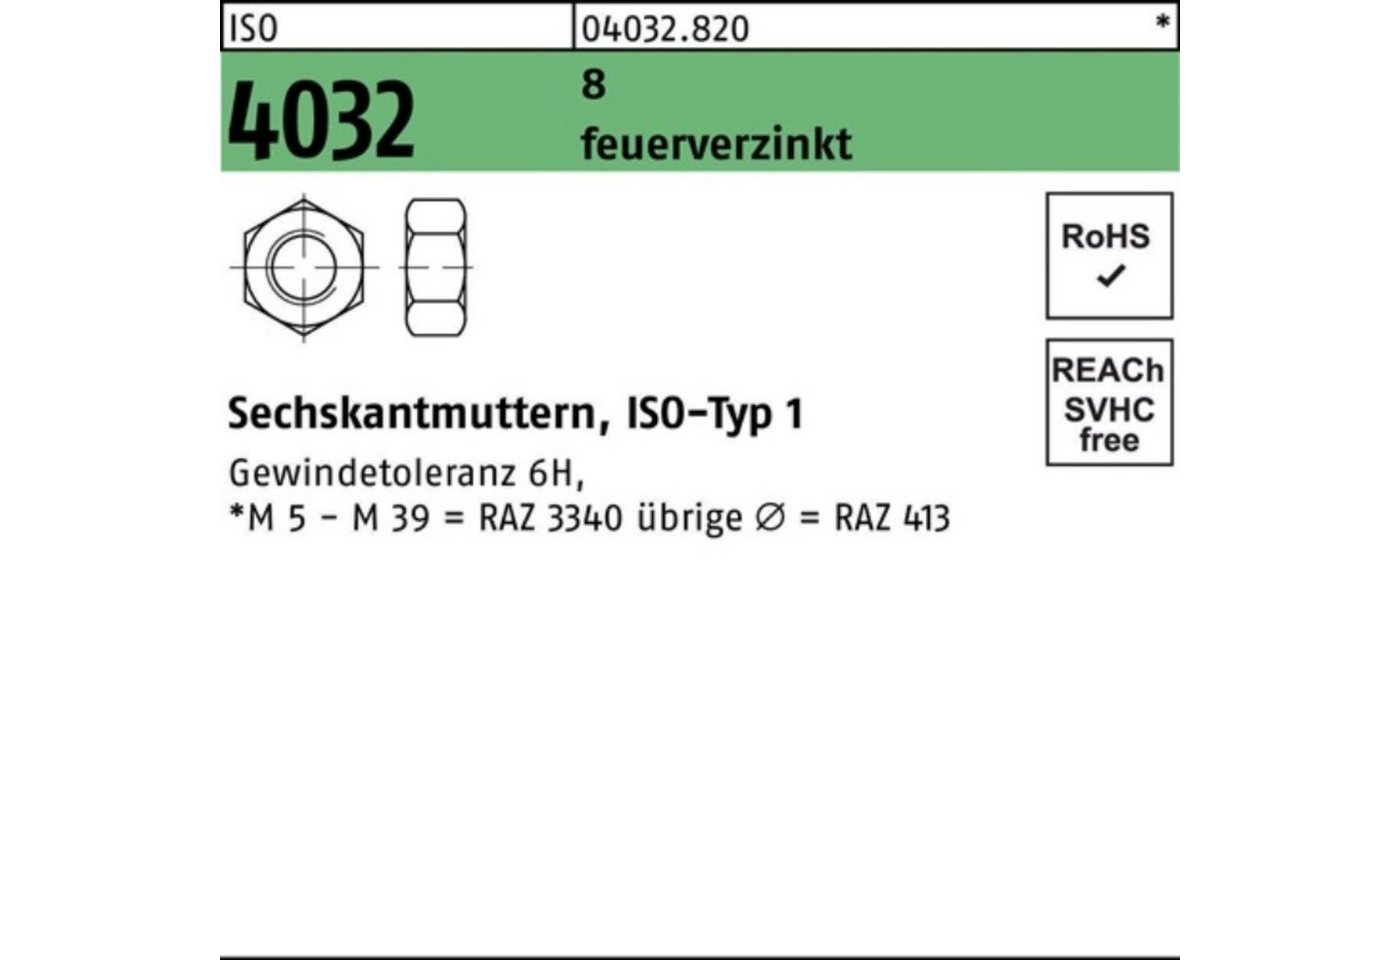 Bufab Muttern 500er Pack Sechskantmutter ISO 4032 M14 8 feuerverz. 500 Stück ISO 40 von Bufab